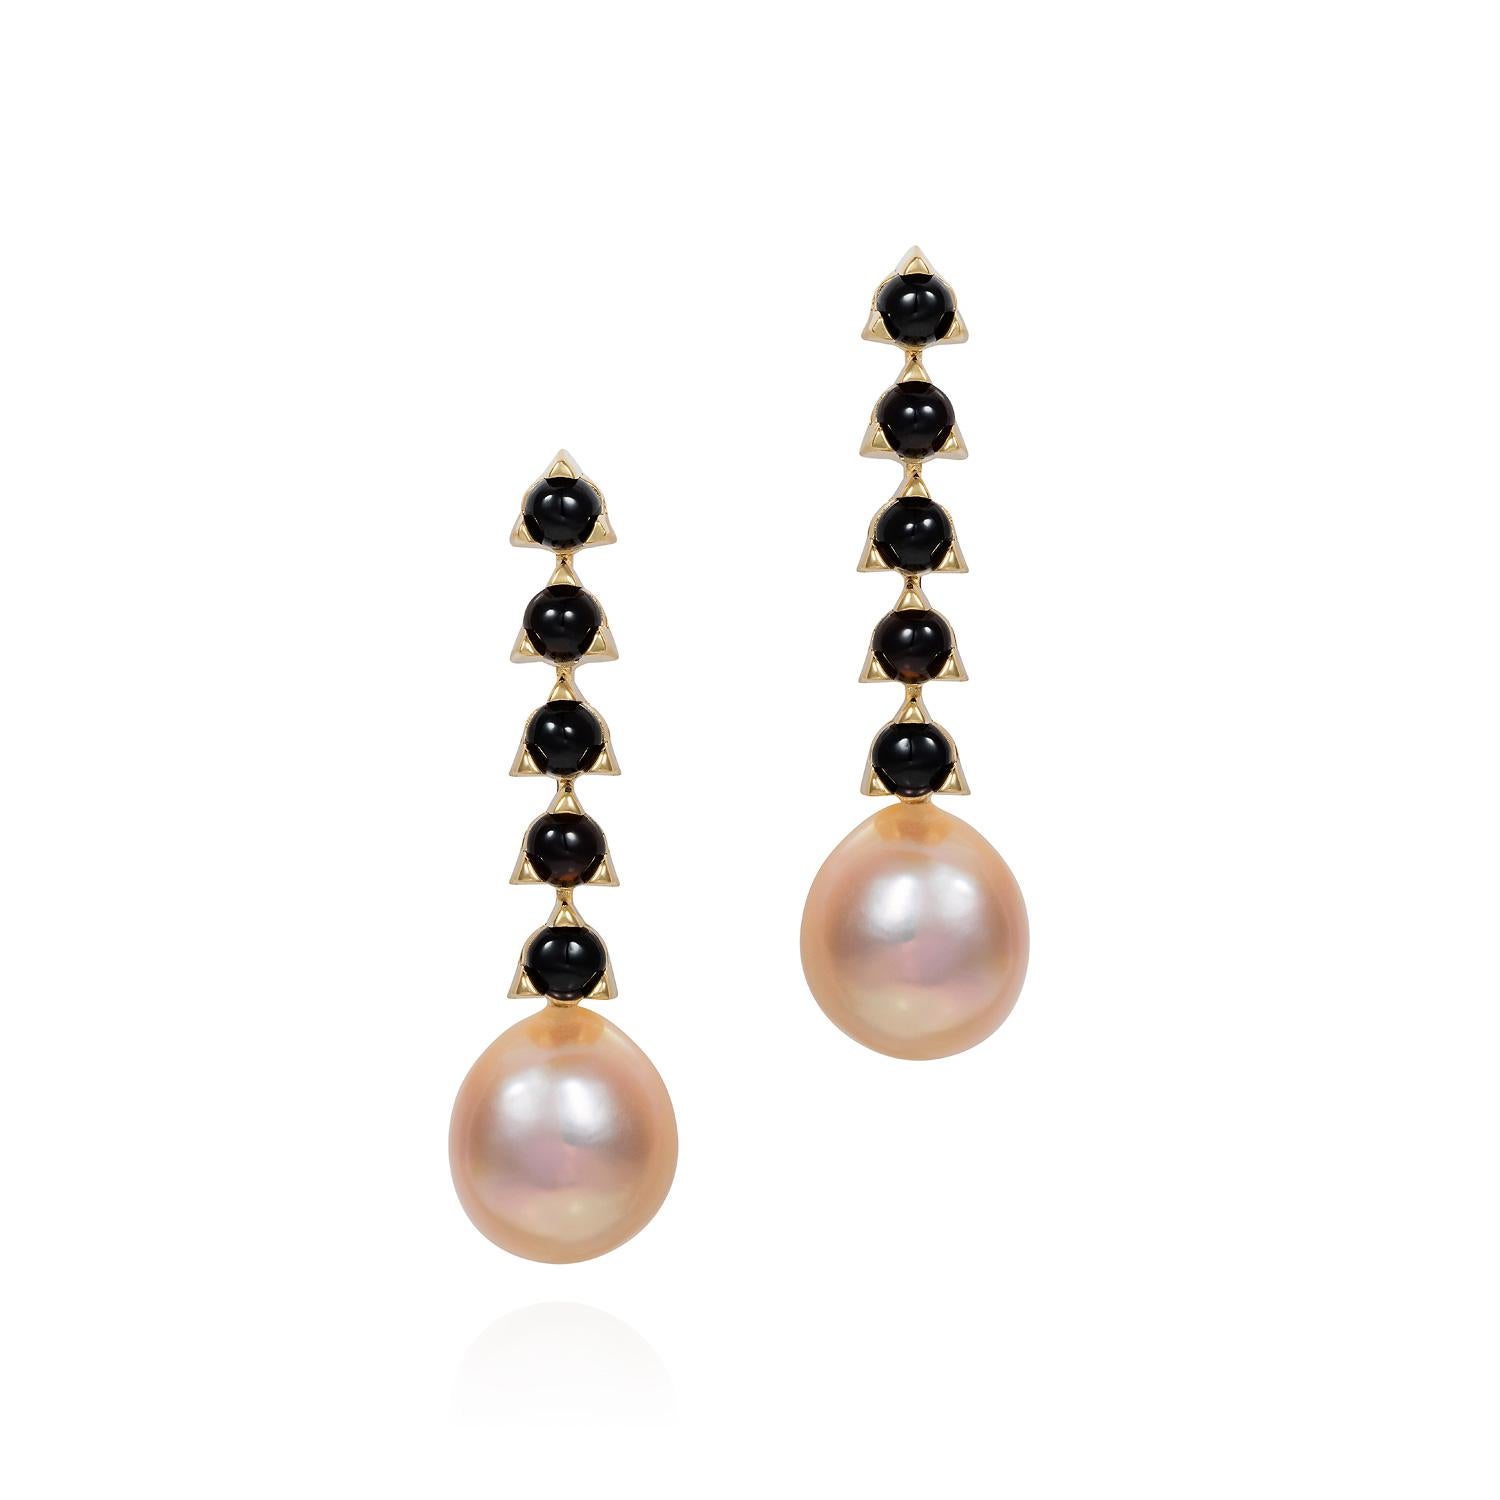 4mm pearl earrings